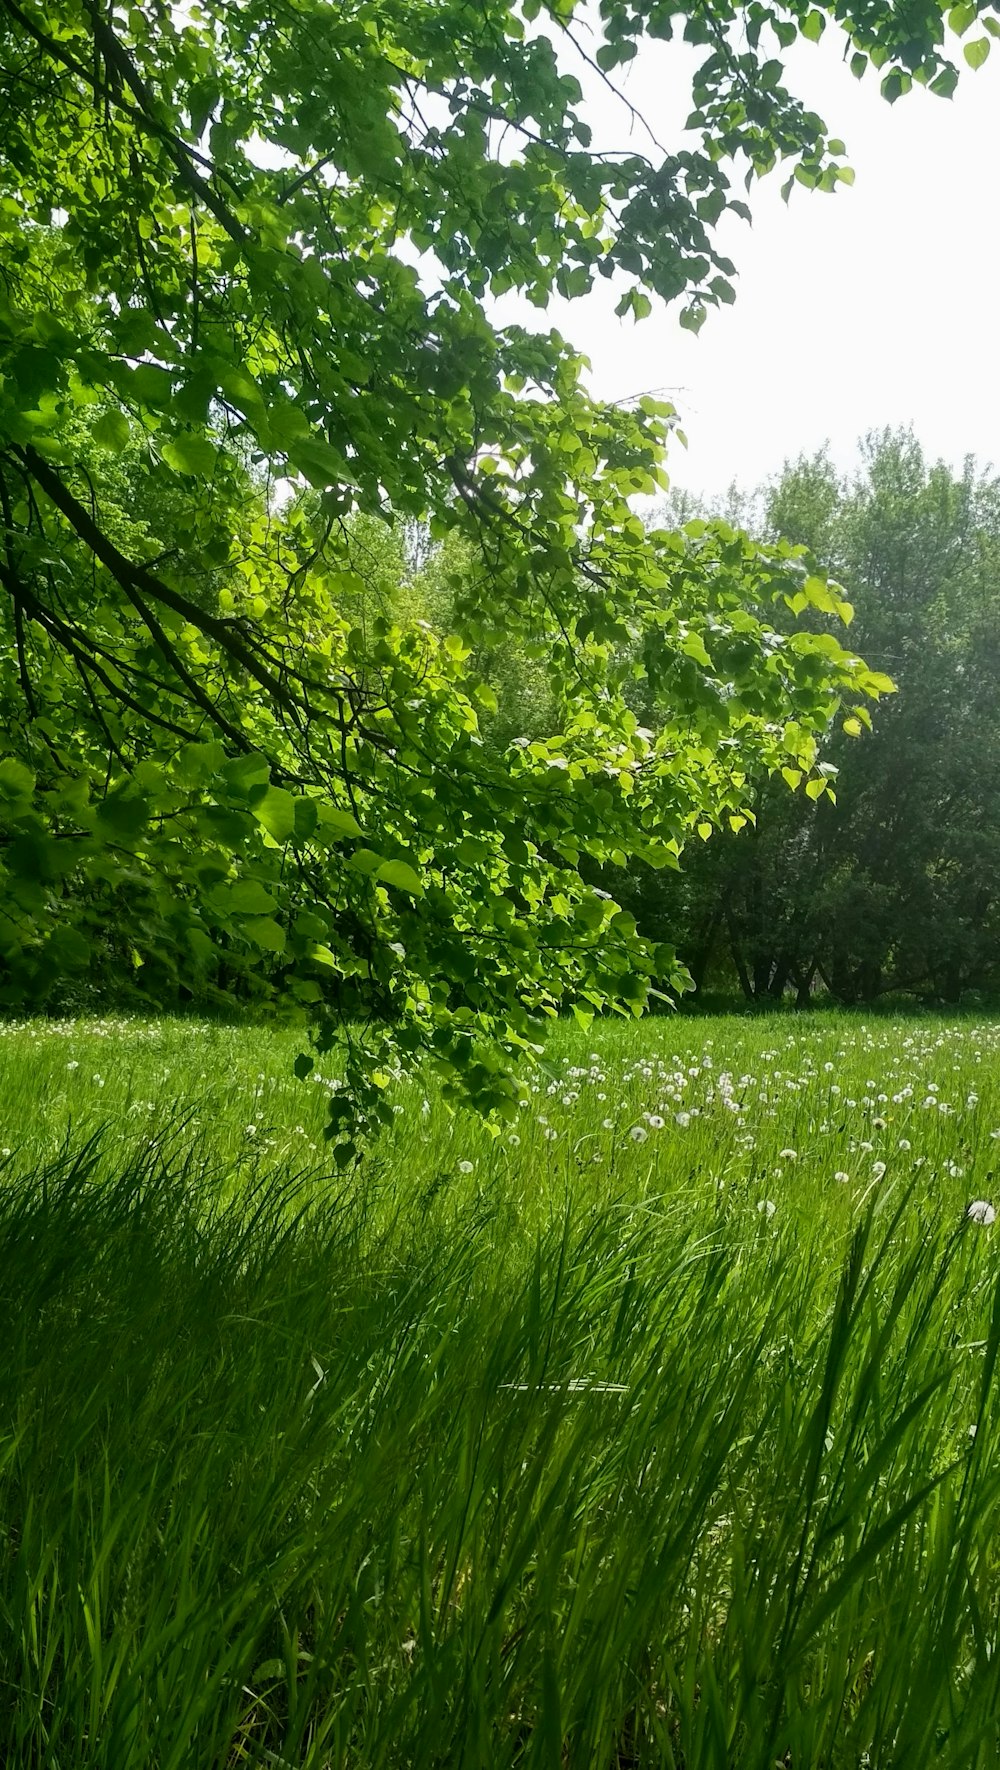 Champ d’herbe verte avec des arbres verts